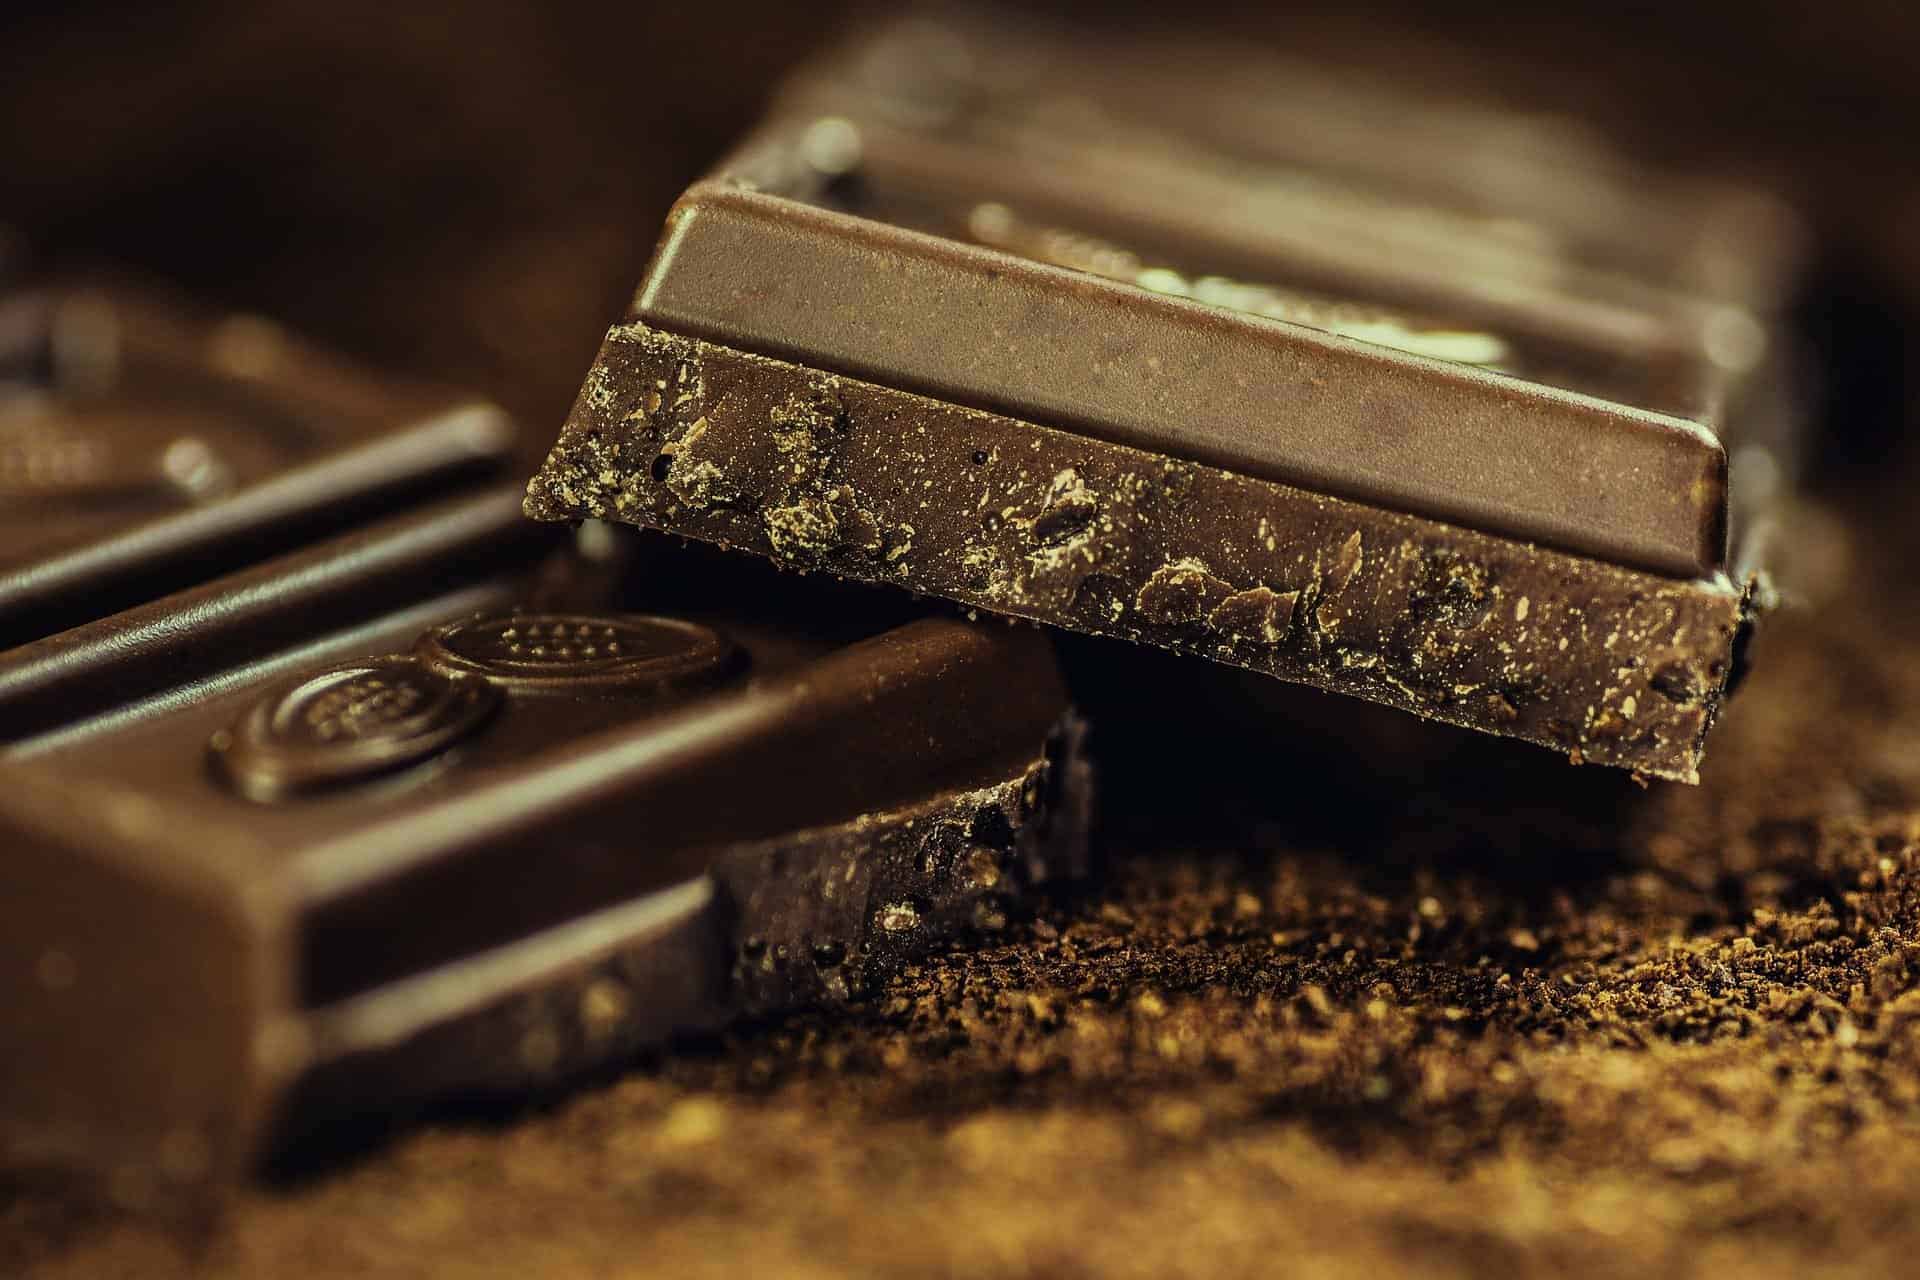 Schokolade in Großaufnahme. /pixabay